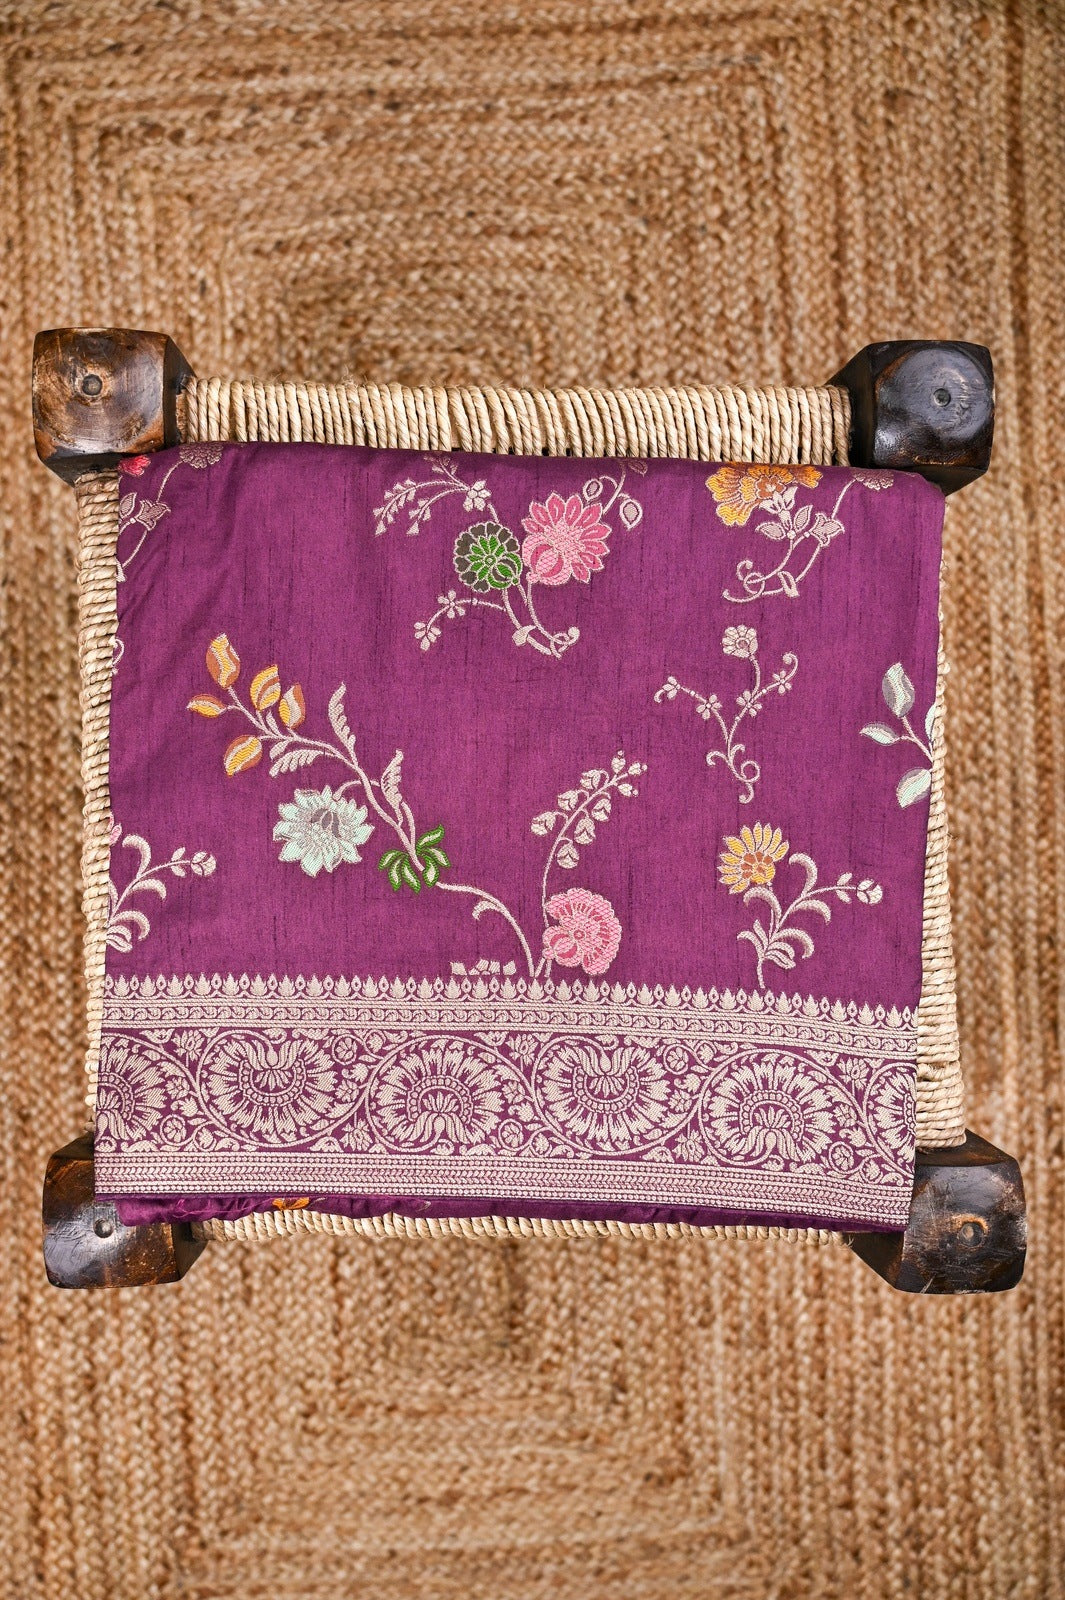 Dola silk saree plum color with allover zari work, rich pallu, small zari border and running plain blouse.